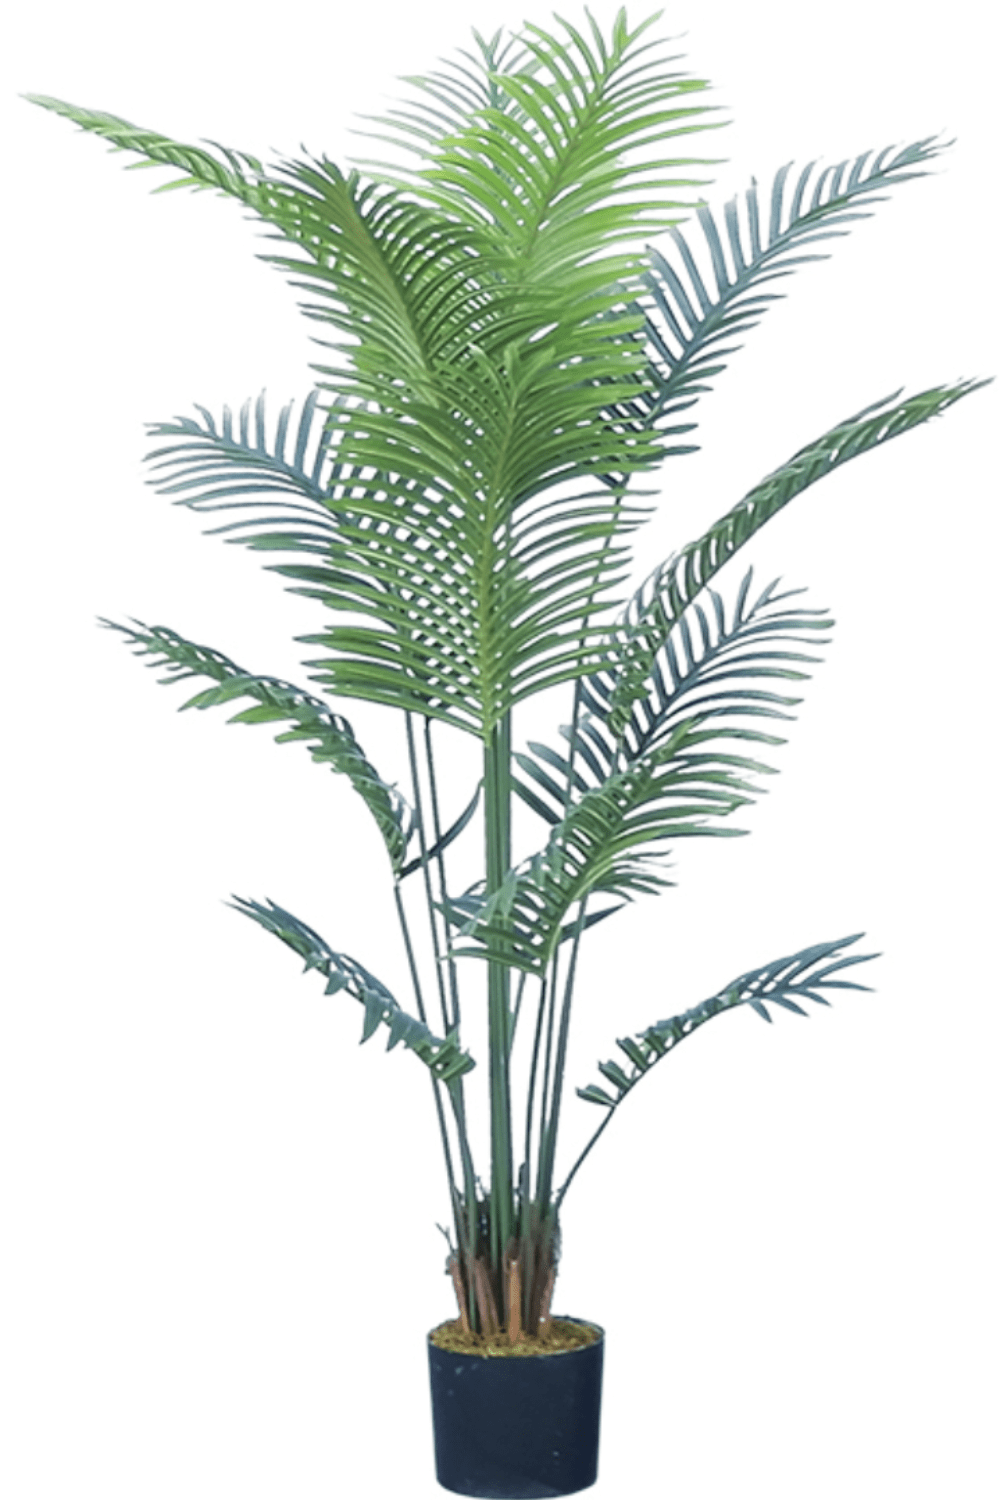 | | Qualität 160cm Hohe Kunstpalme PrettyPflanzen